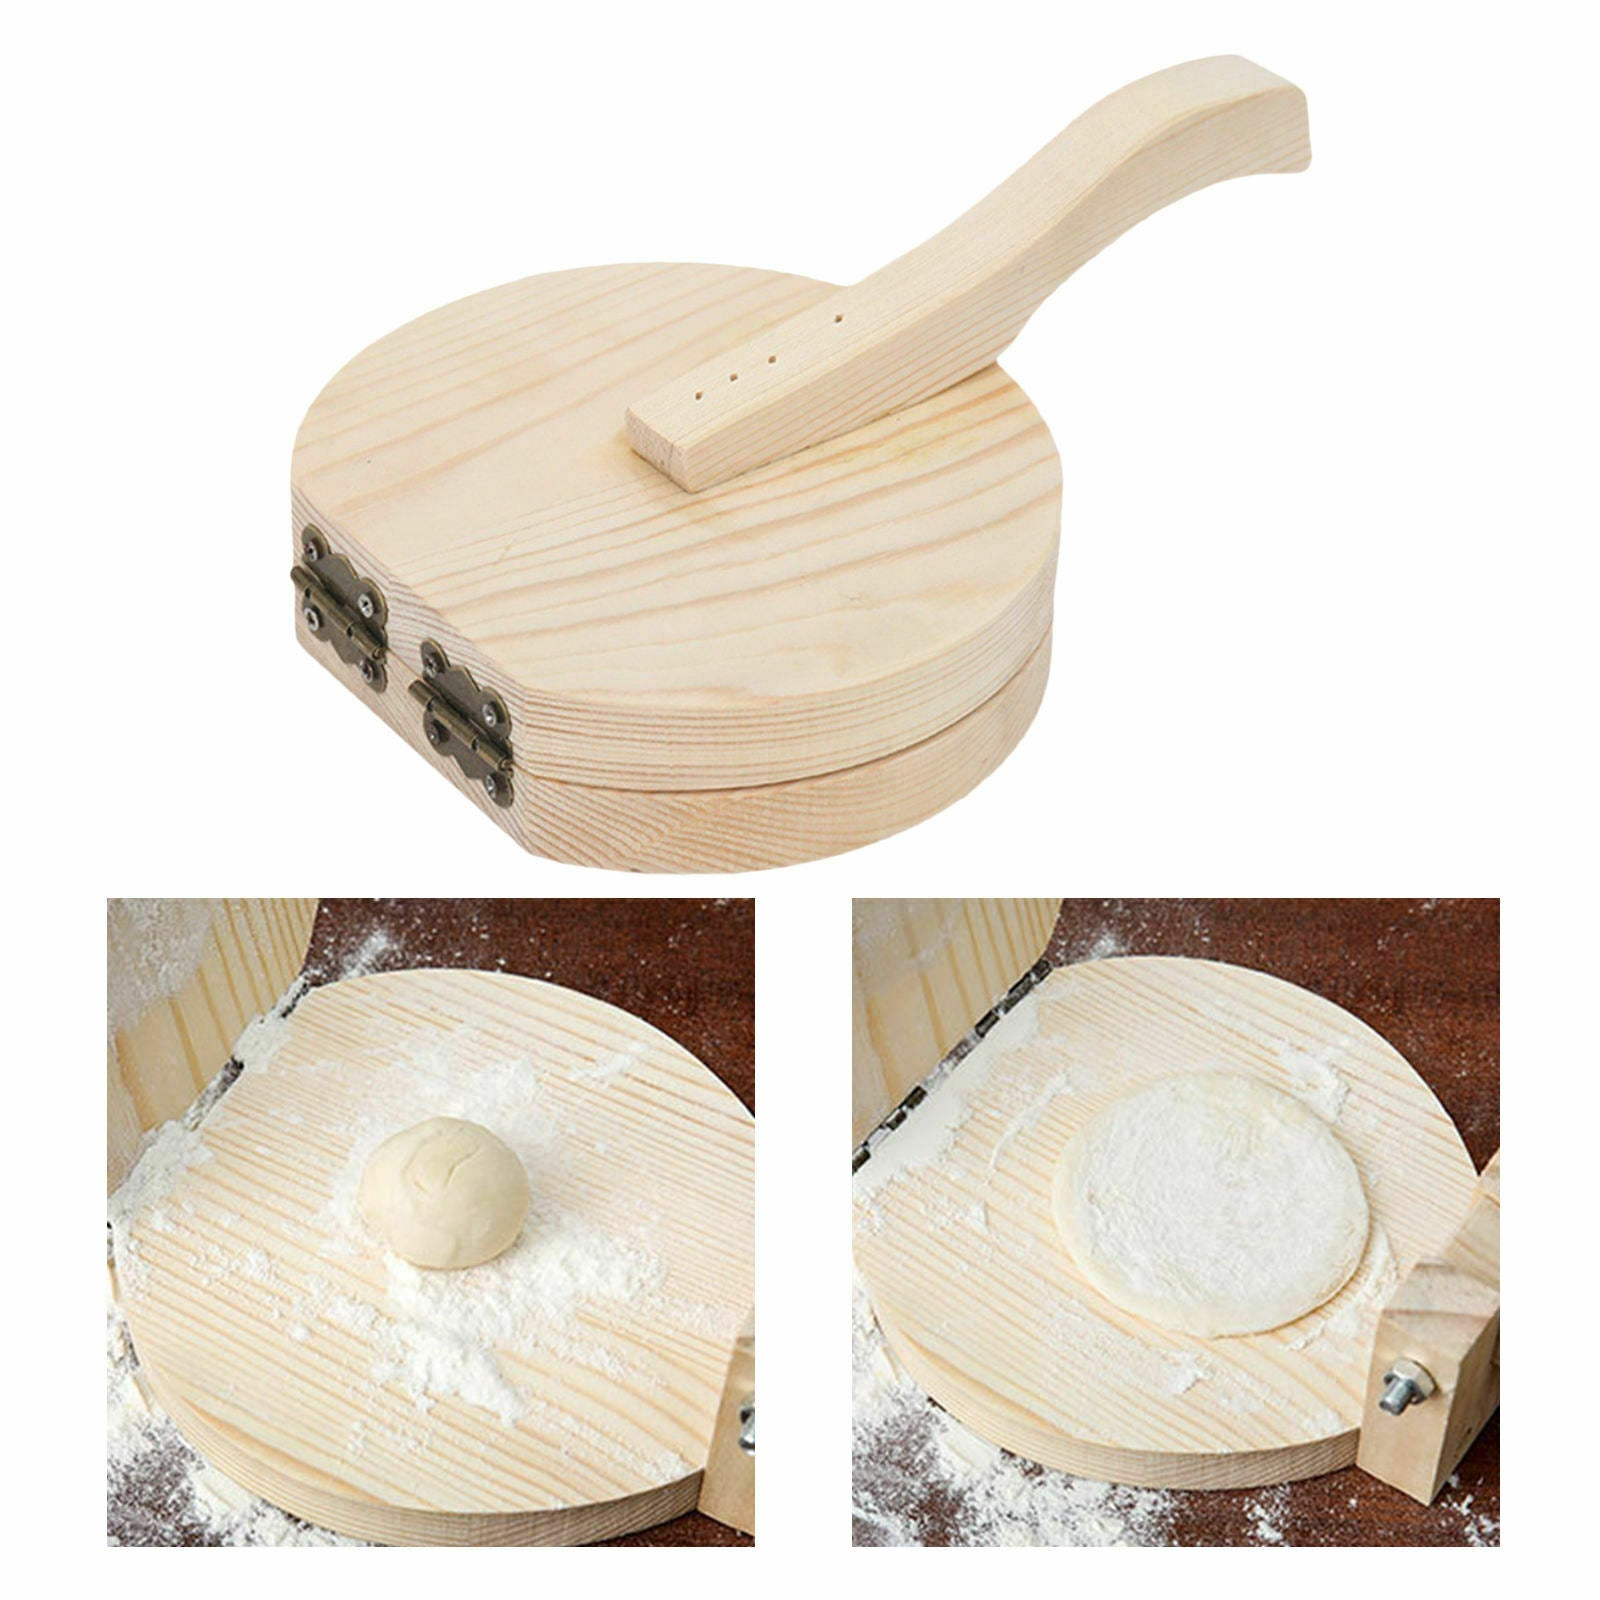 Wood Dough Presser Skin Wrapper Pie Pastry Maker for Baking Gadget Supplies